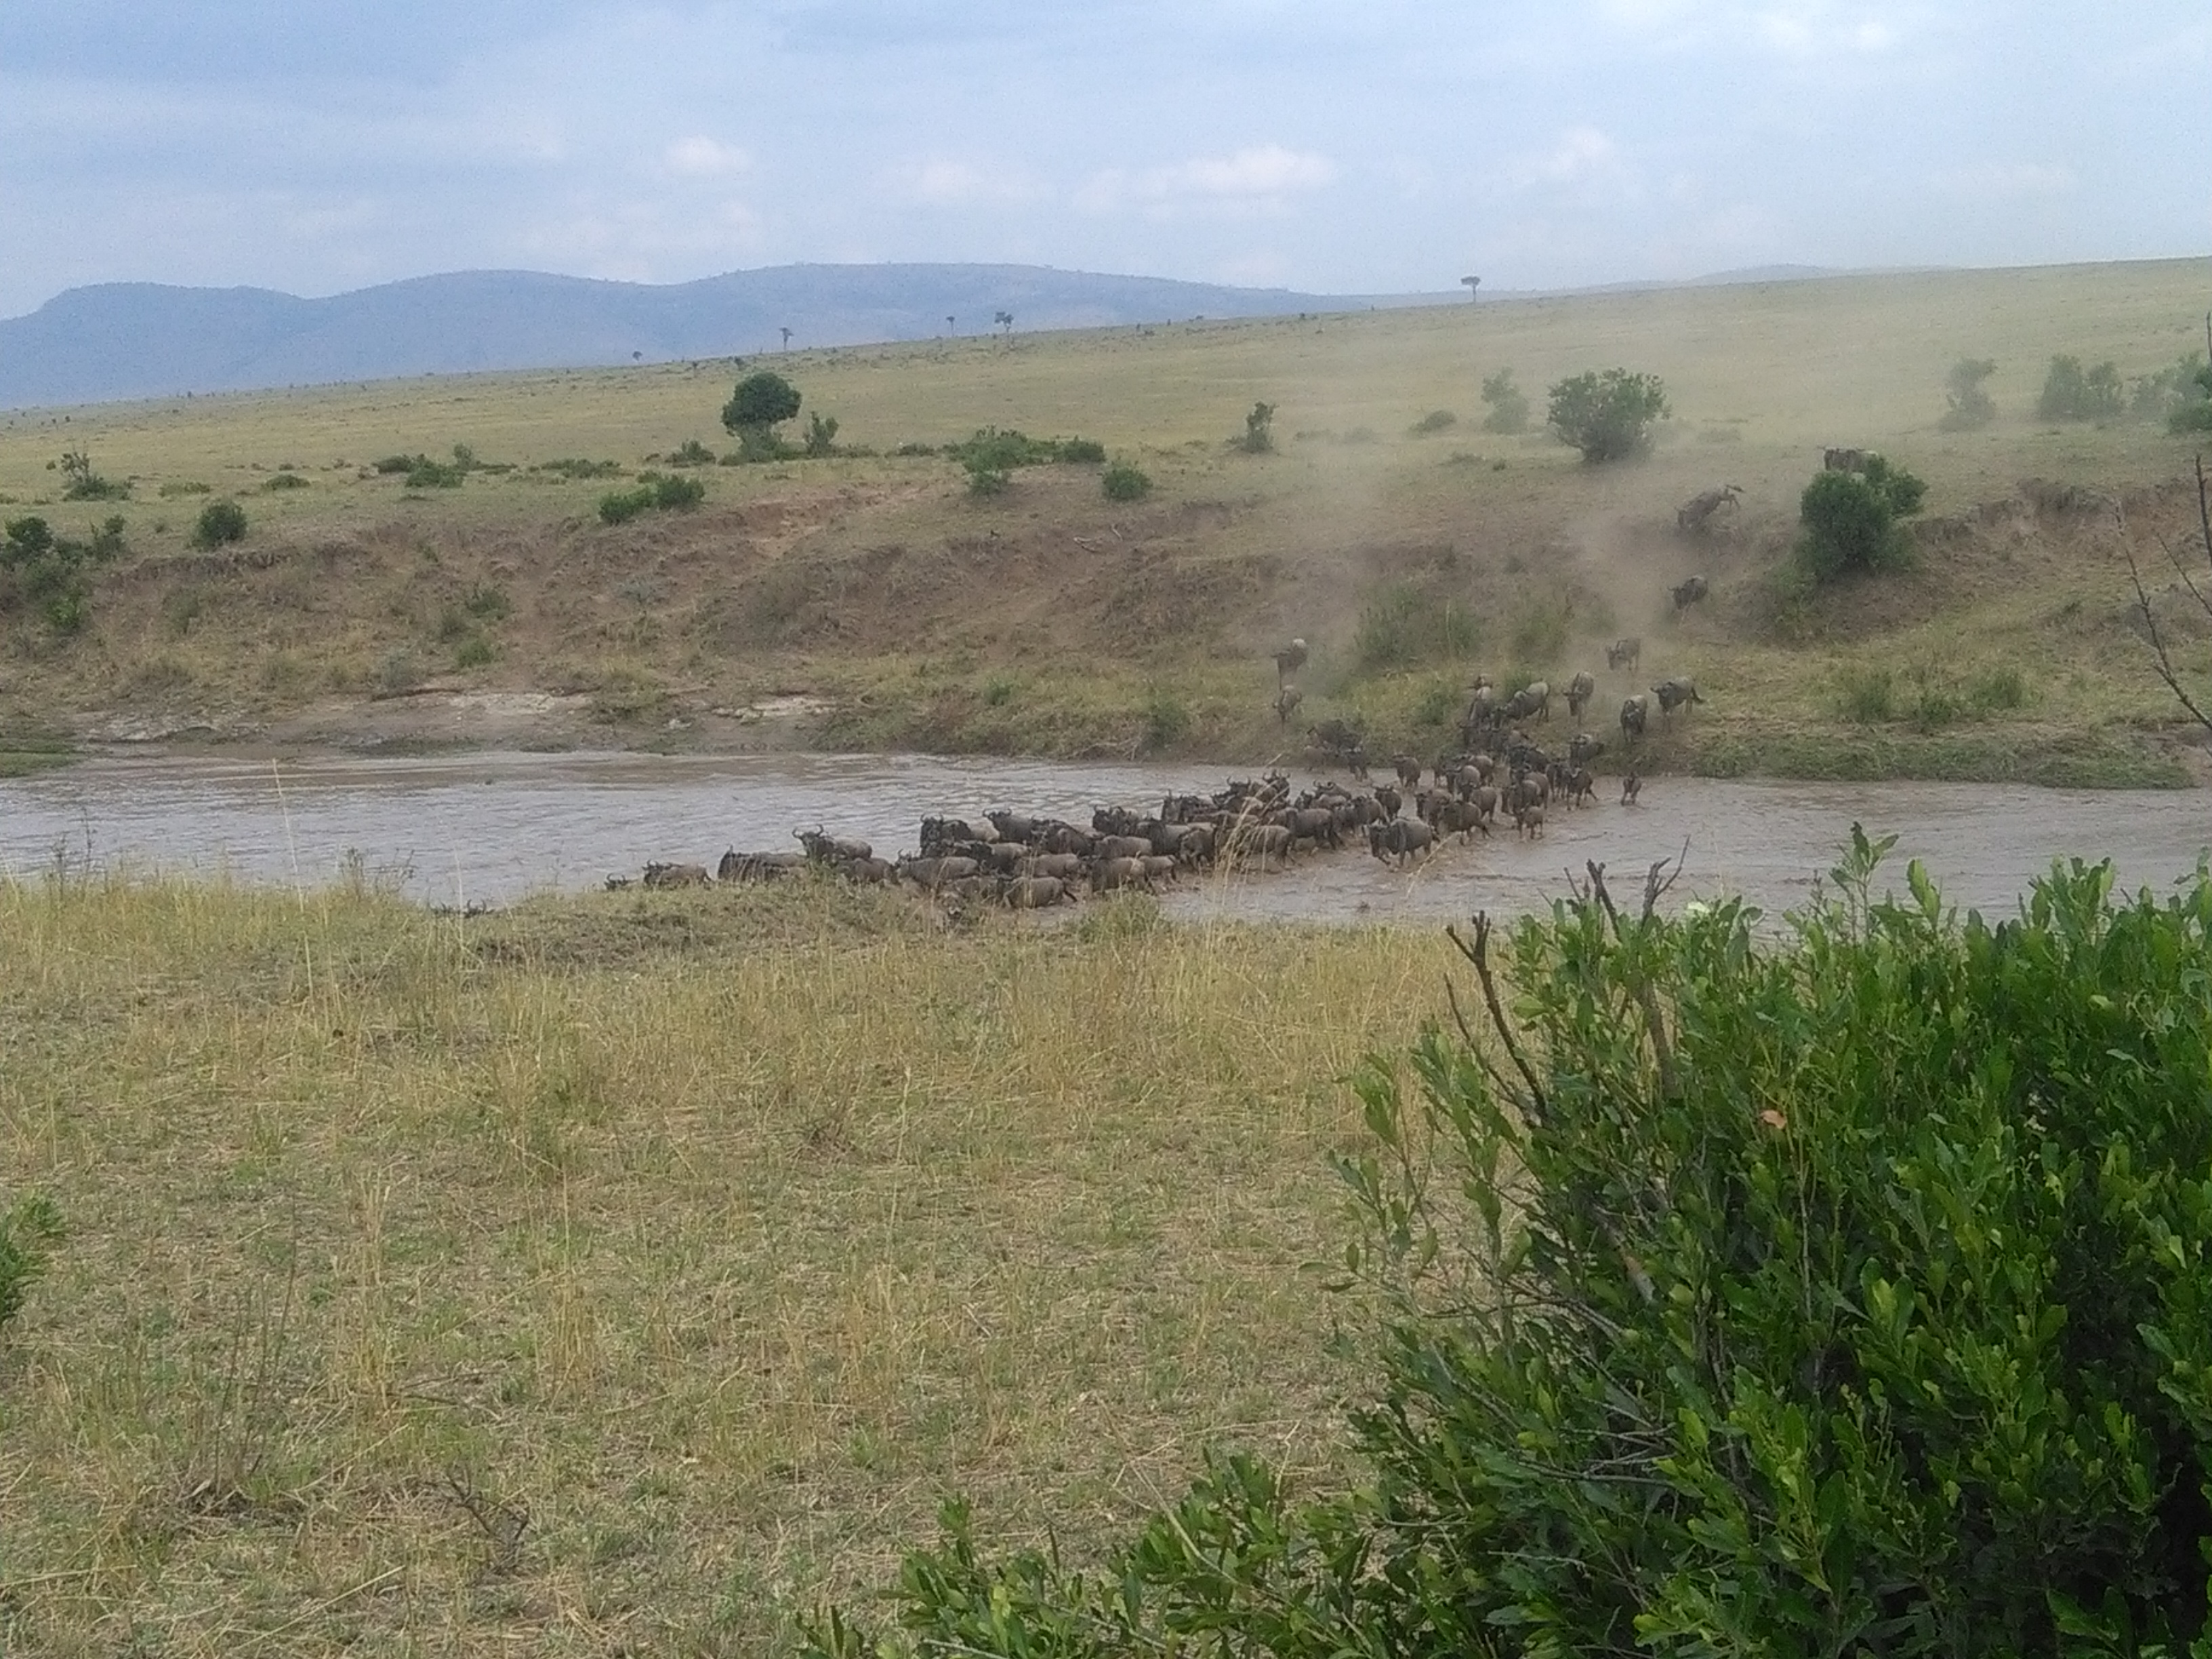 Kenya Wildebeest Migration Safari, YHA Kenya Travel Package.